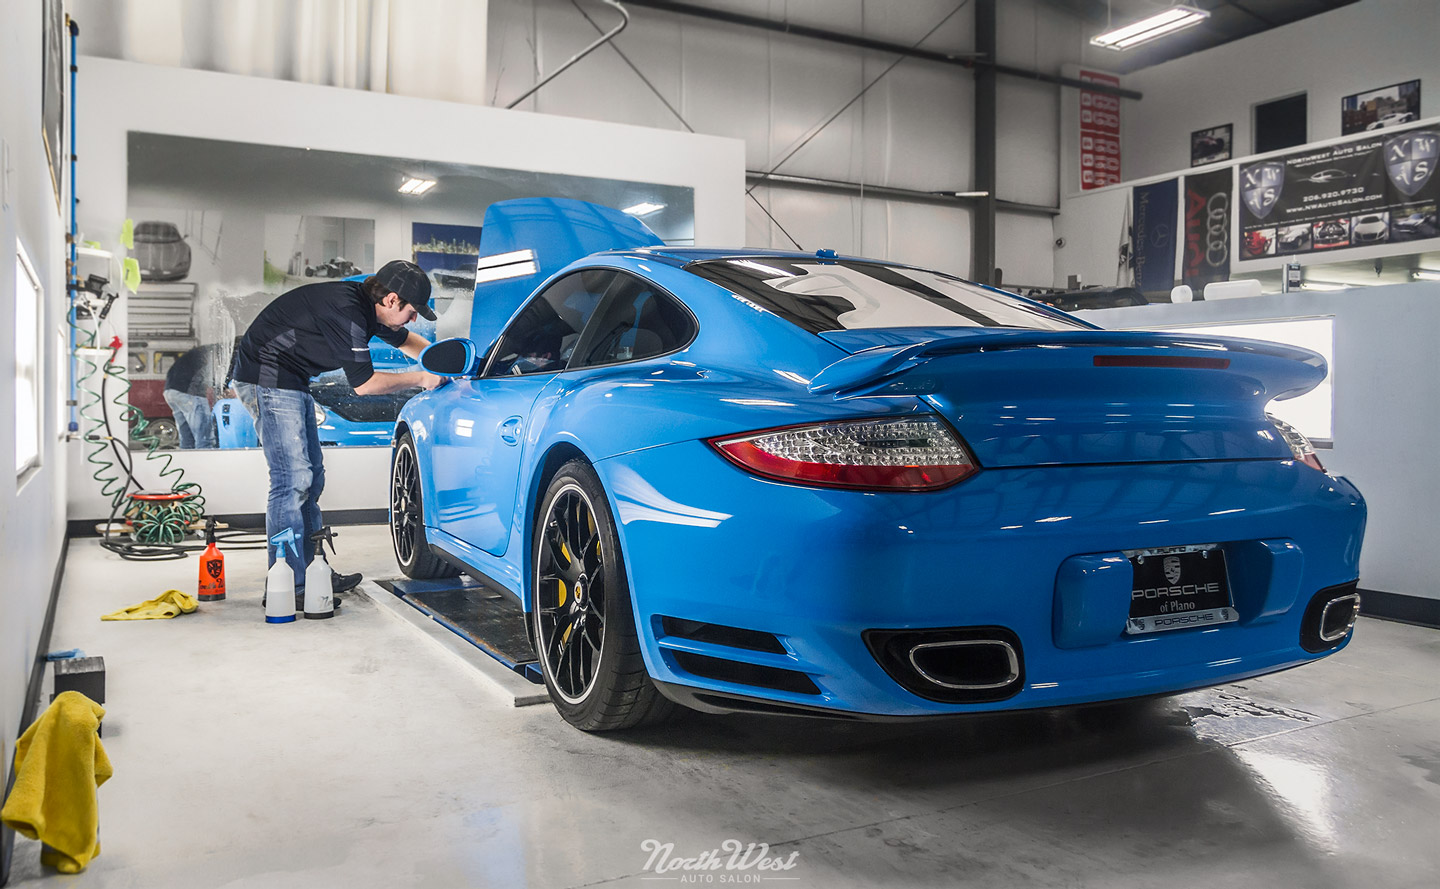 Mexico-Blue-Porsche-Turbo-S-XPEL-Ultimate-install